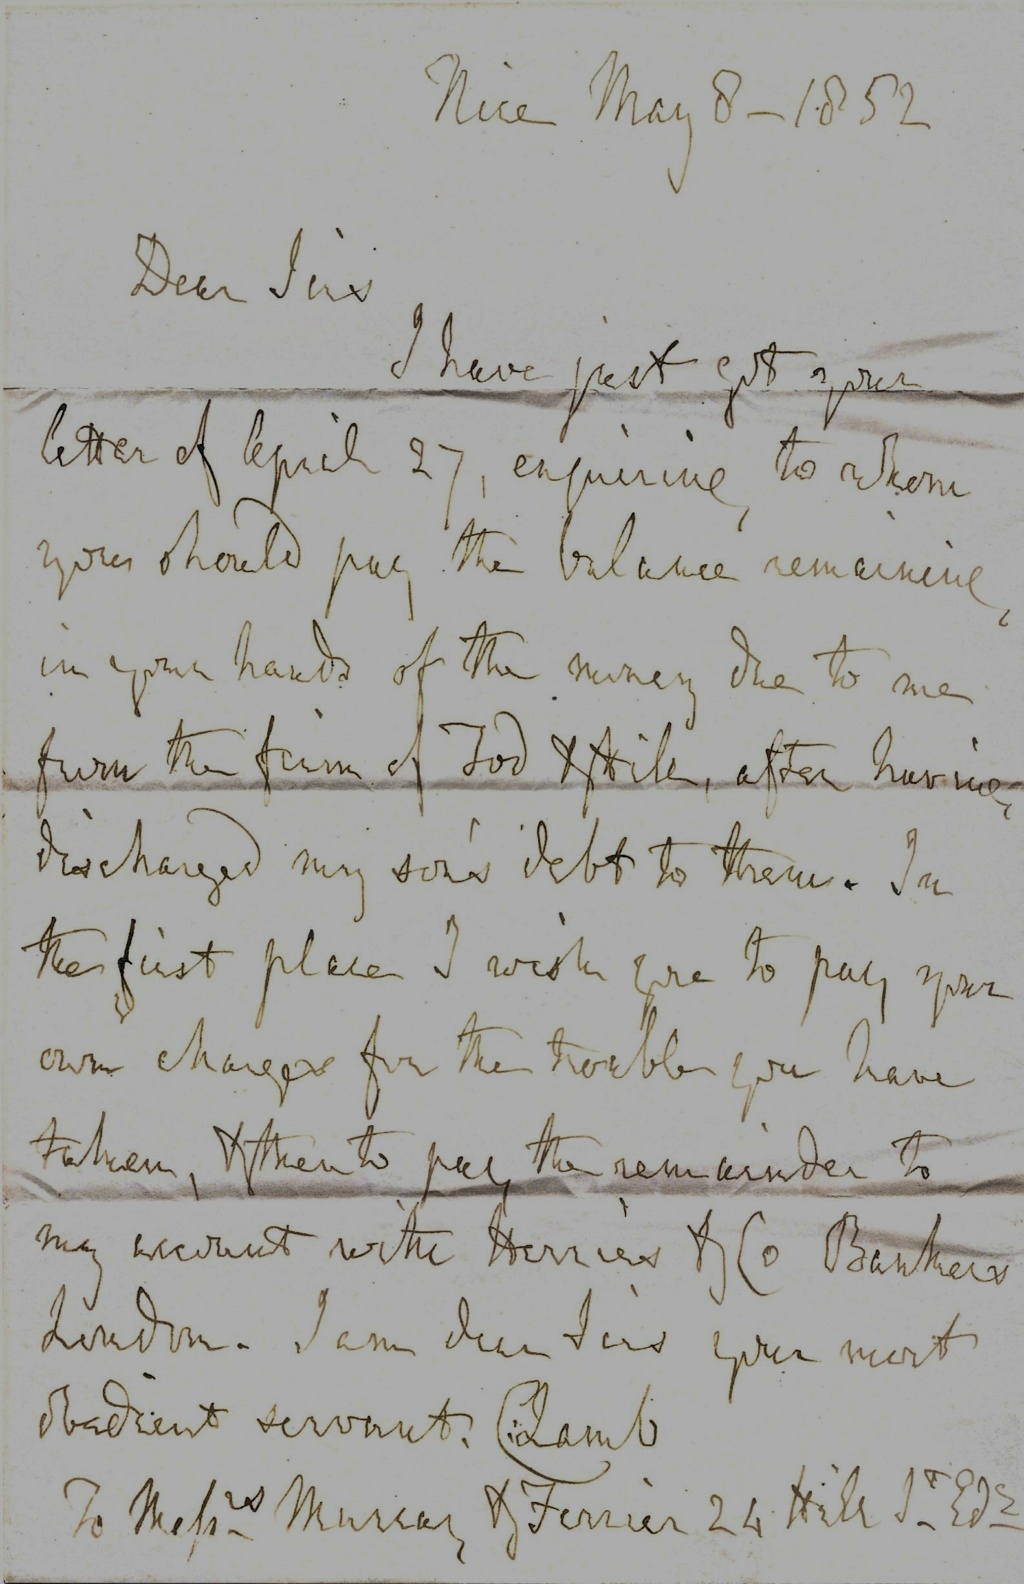 Tarif France - Angleterre en Mai 1852 (besoin d'aide).  St-lau13